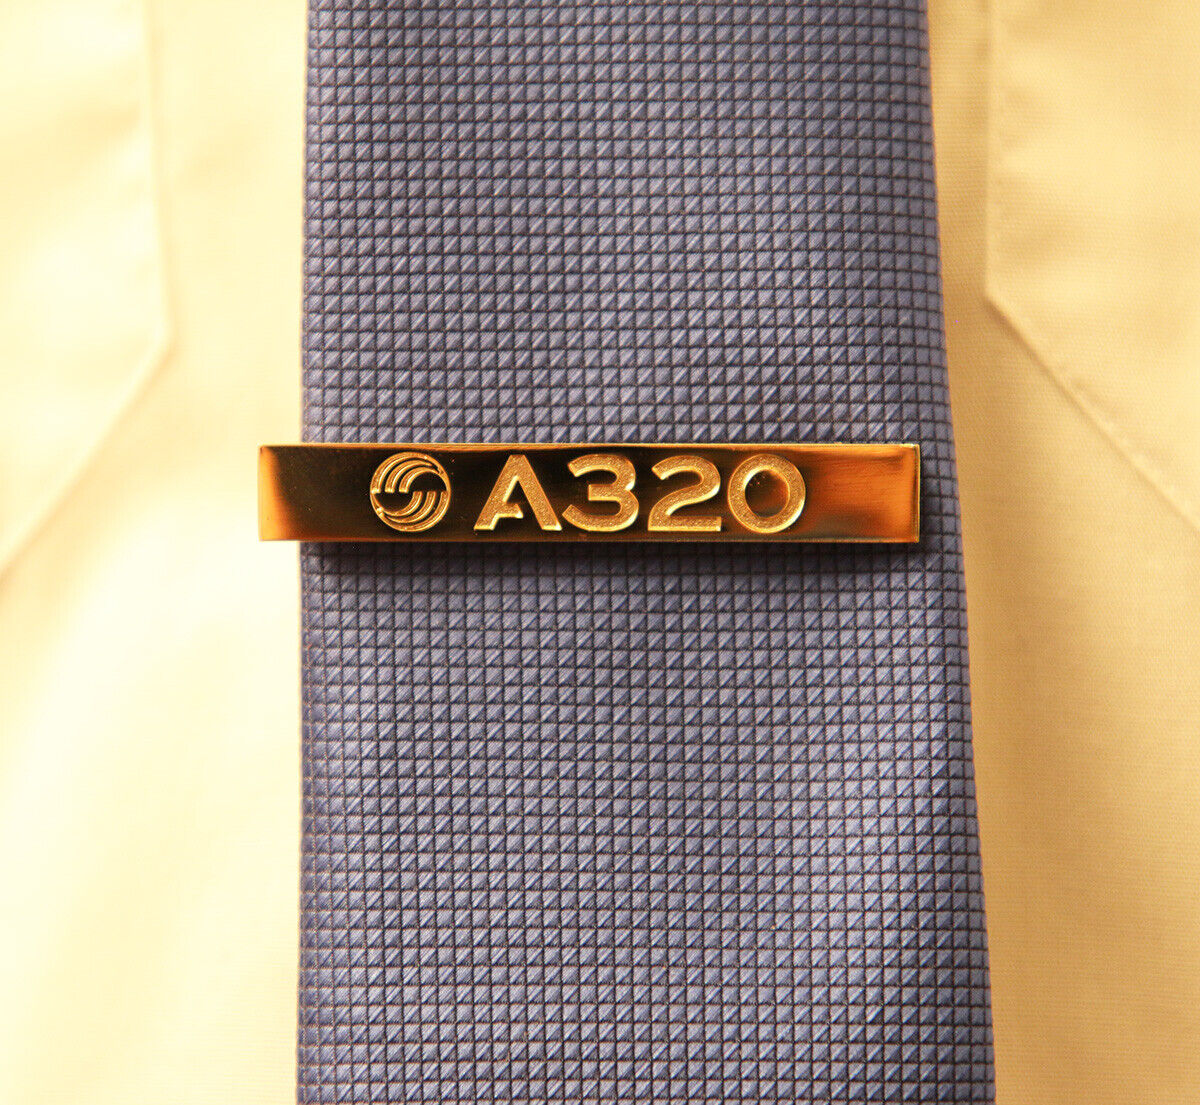 Tiebar Airbus A320 GOLD Tie ClaspTie Clip Bar